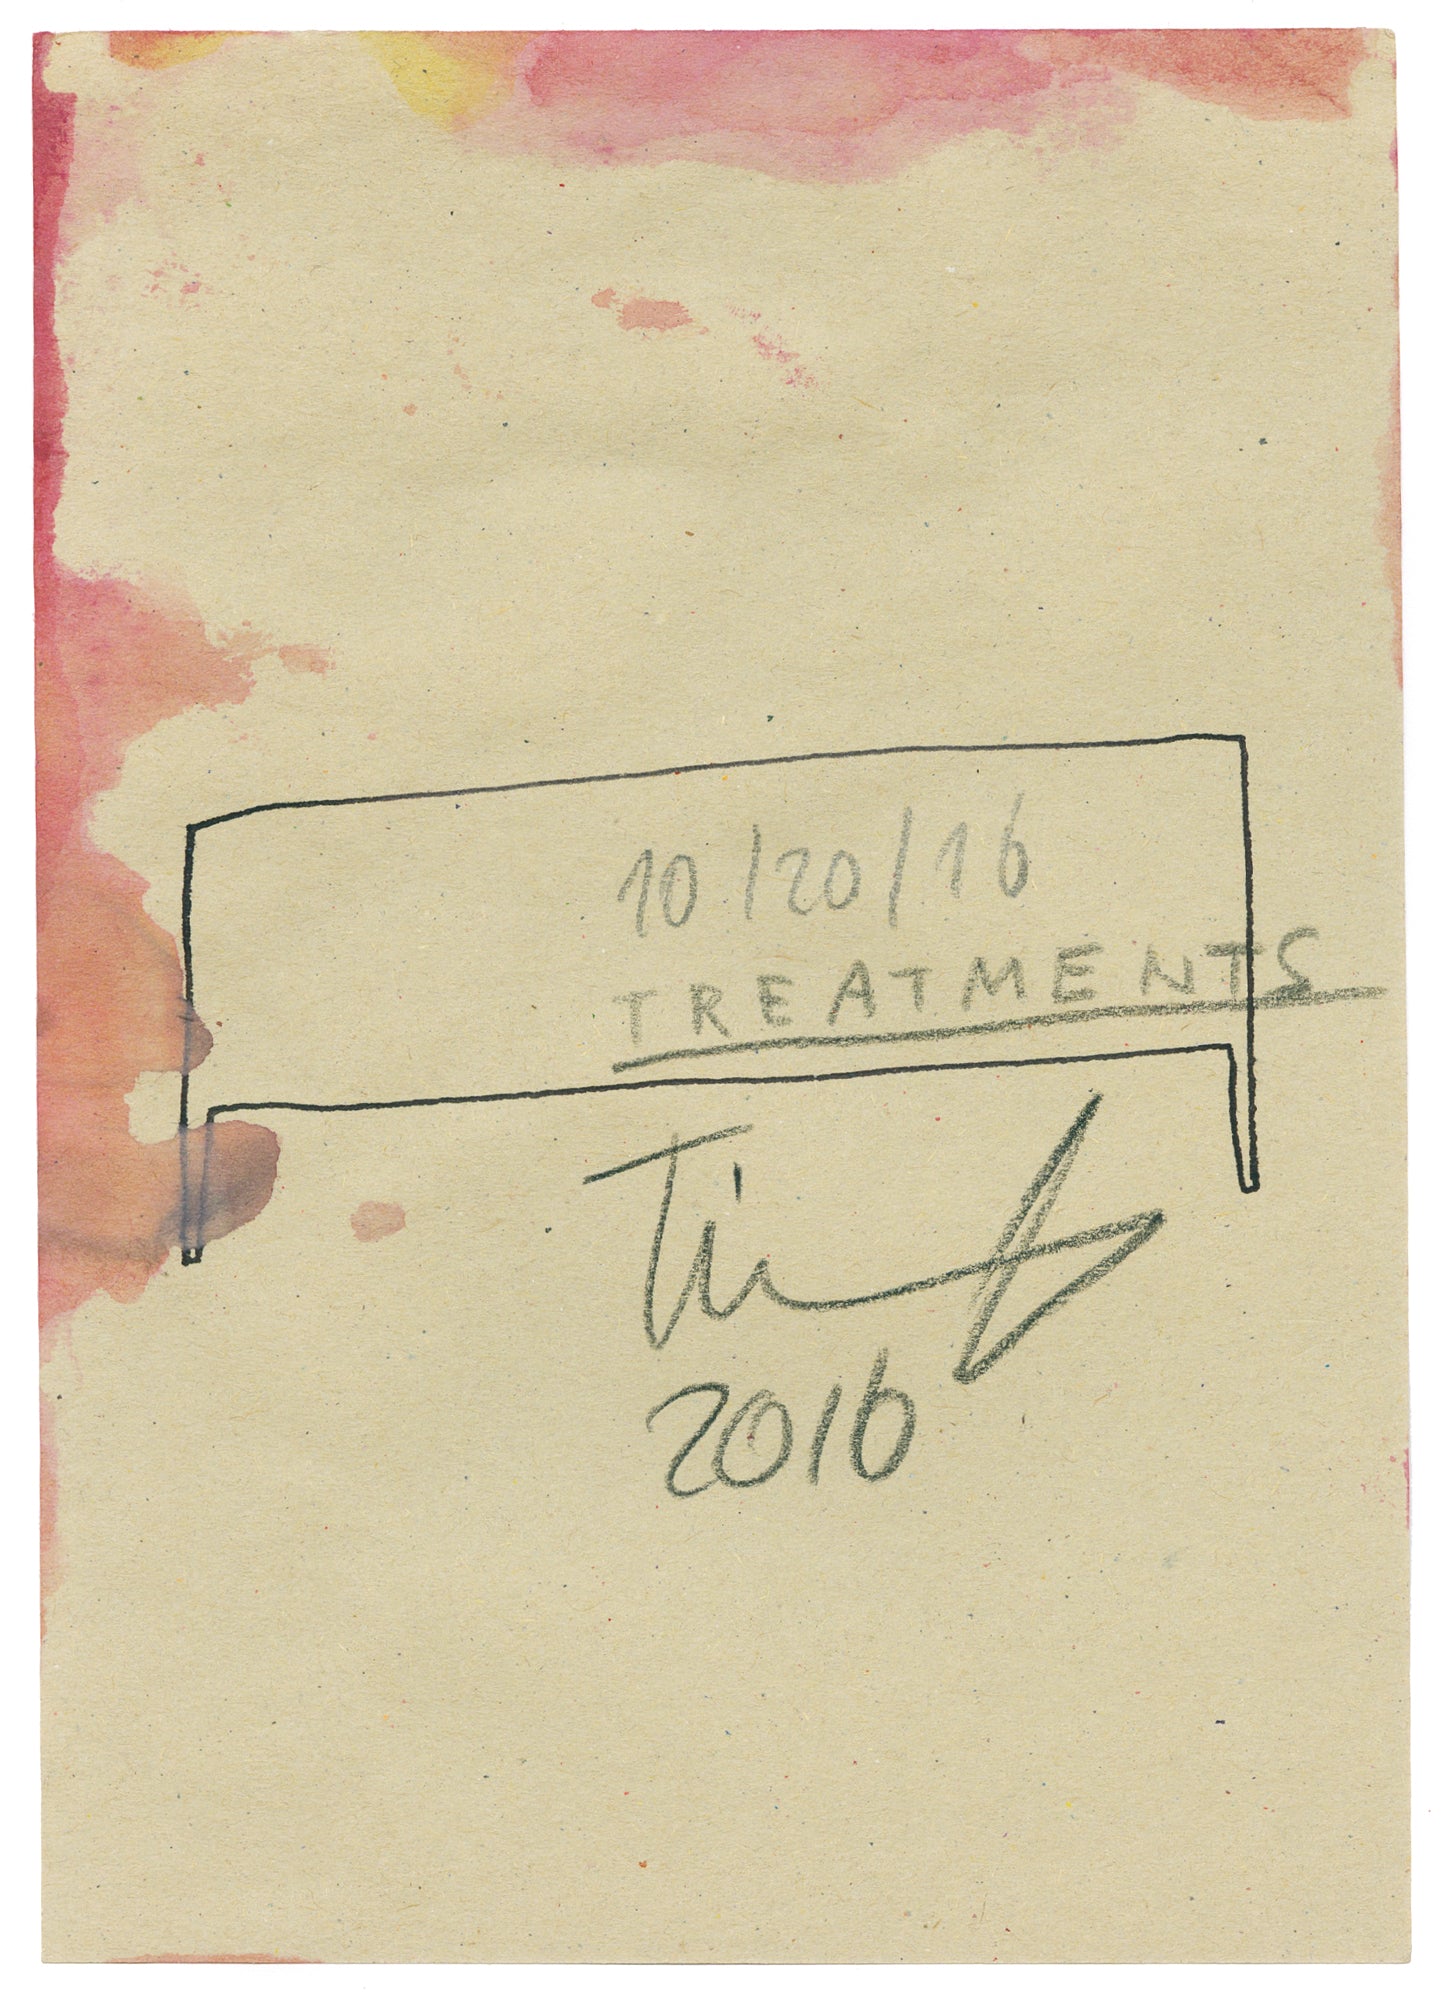 10/20/16 Treatment